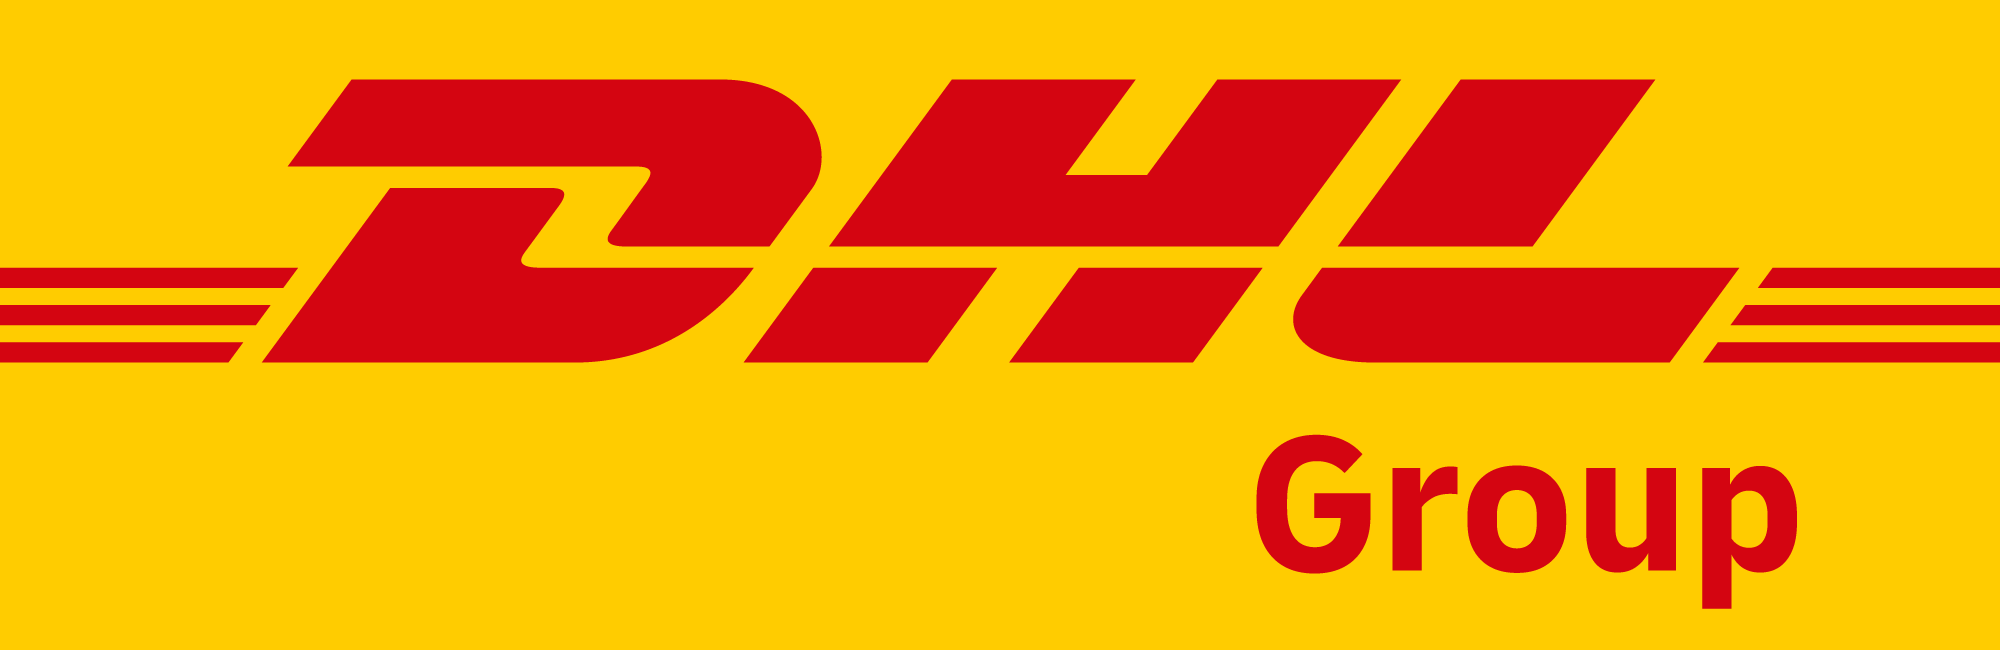 DHL_Group_logo_rgb